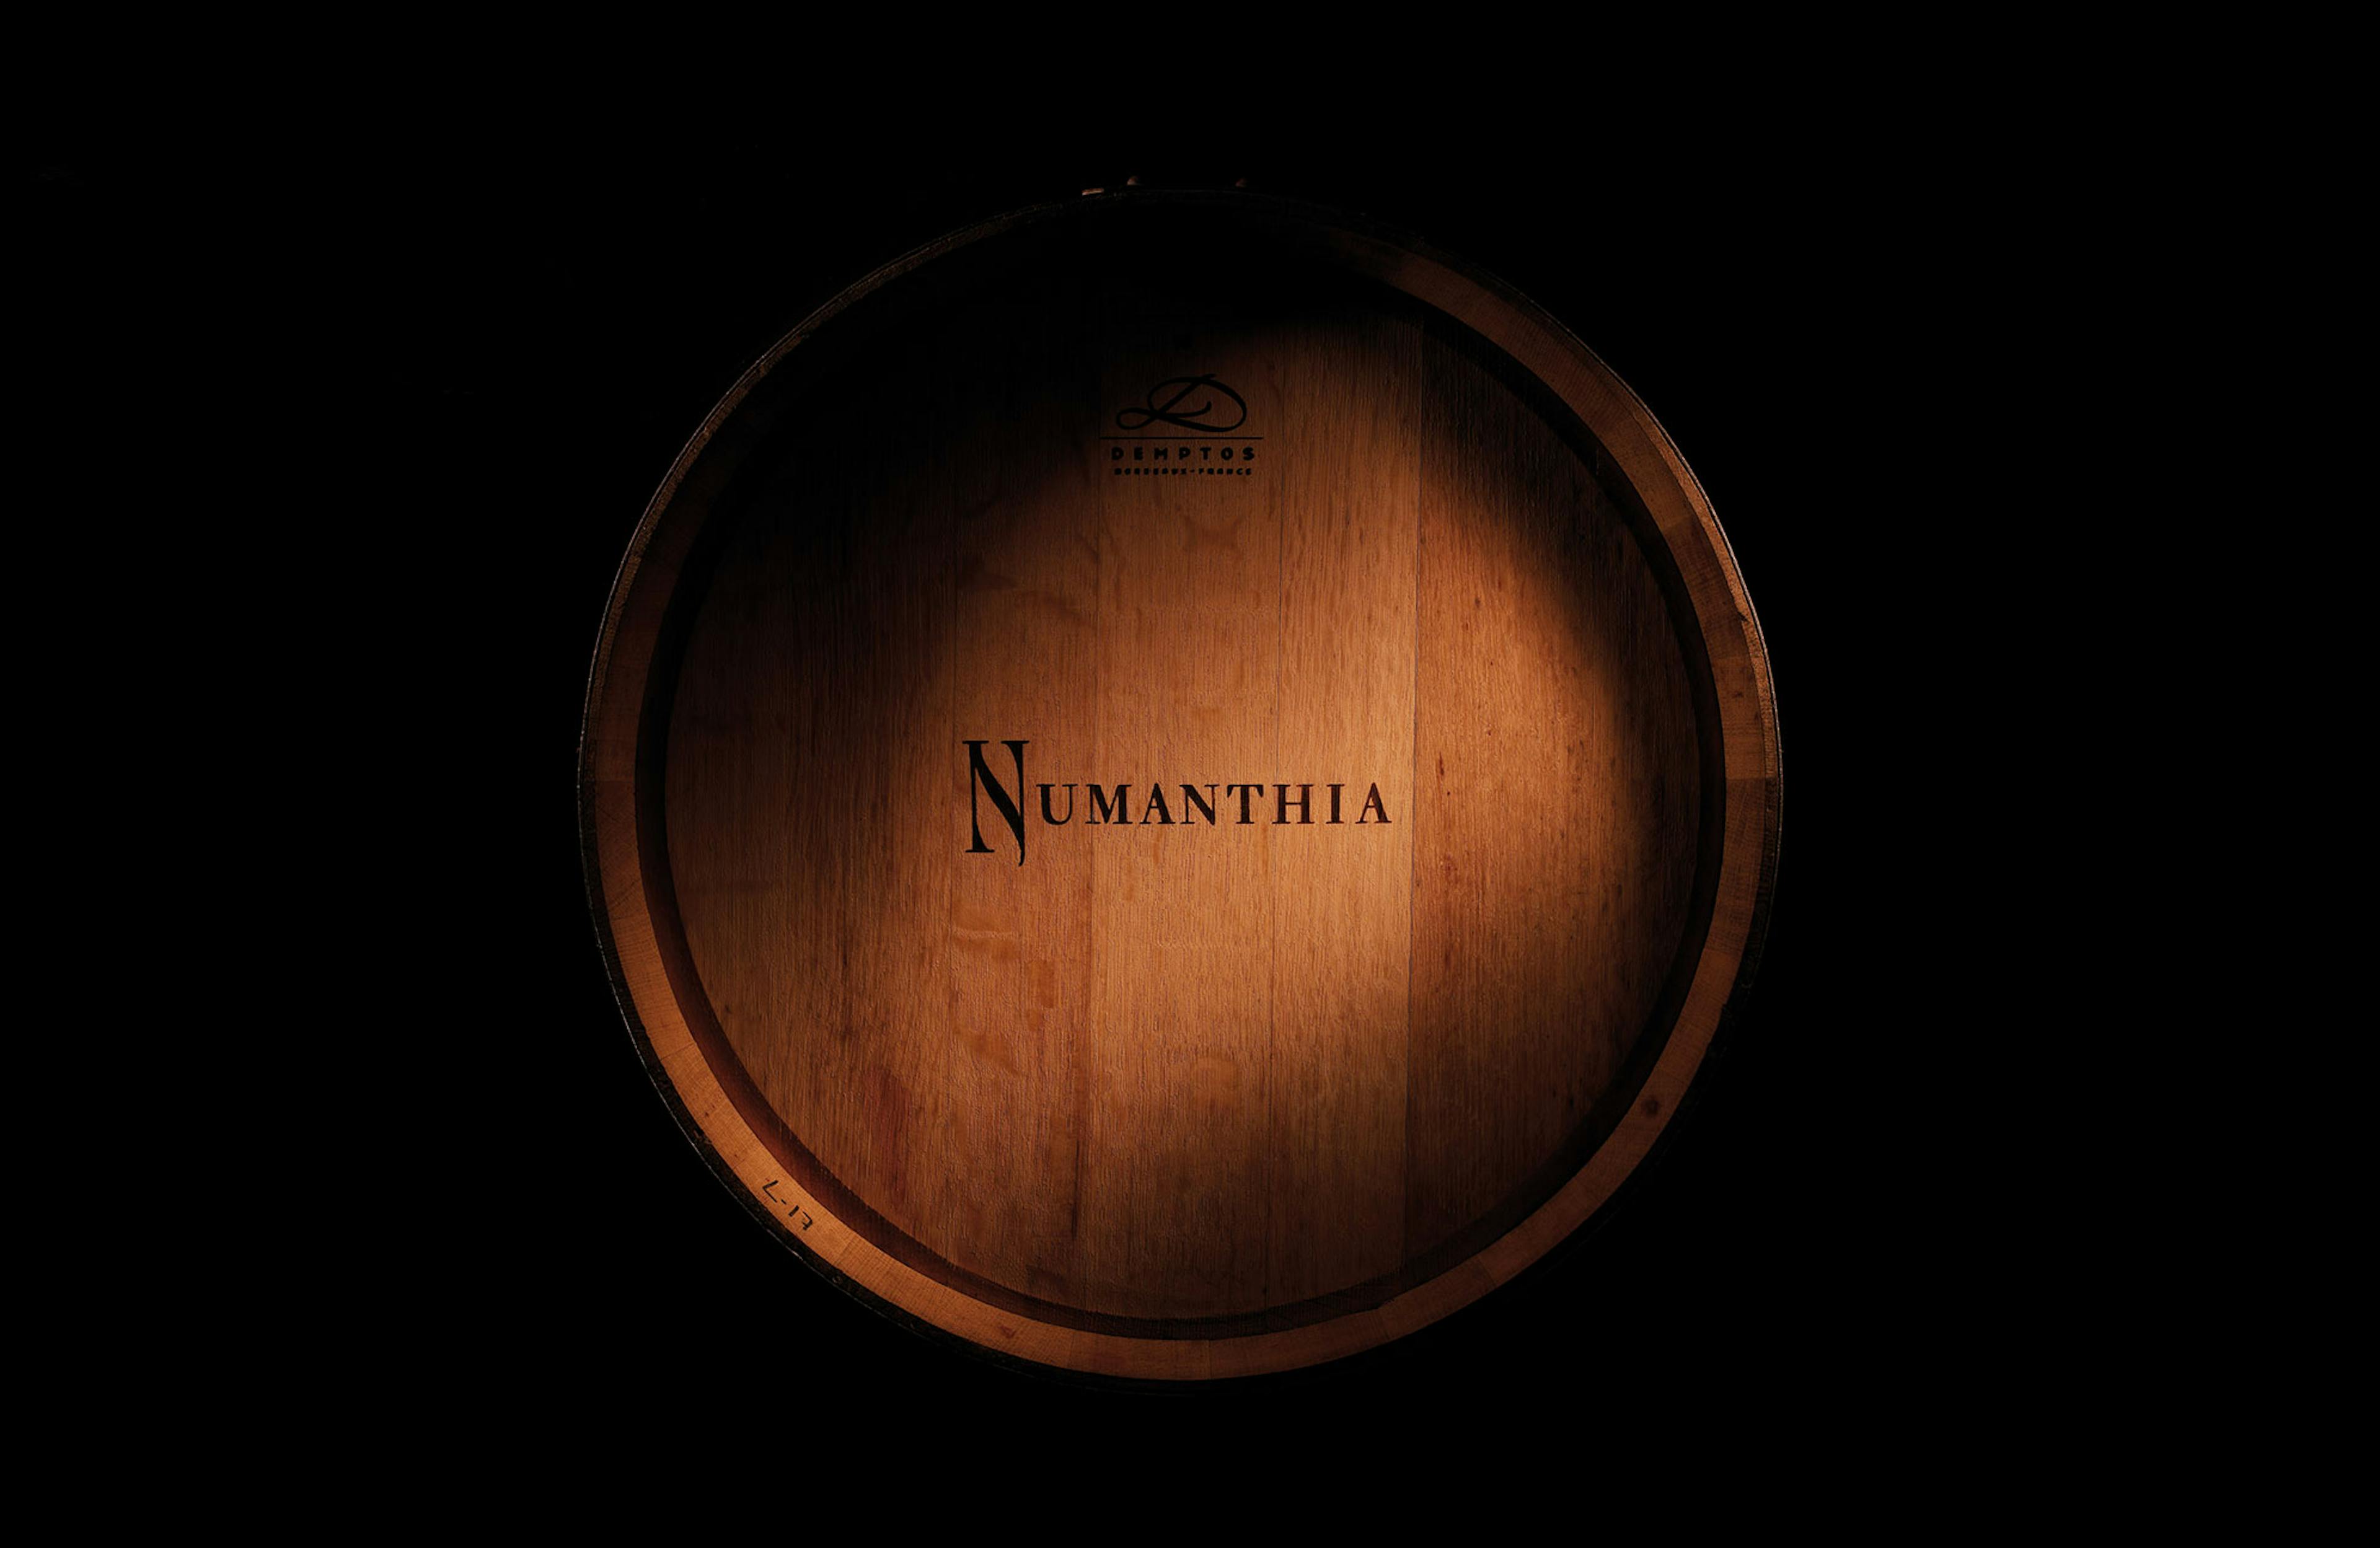 Numanthia oak barrel.